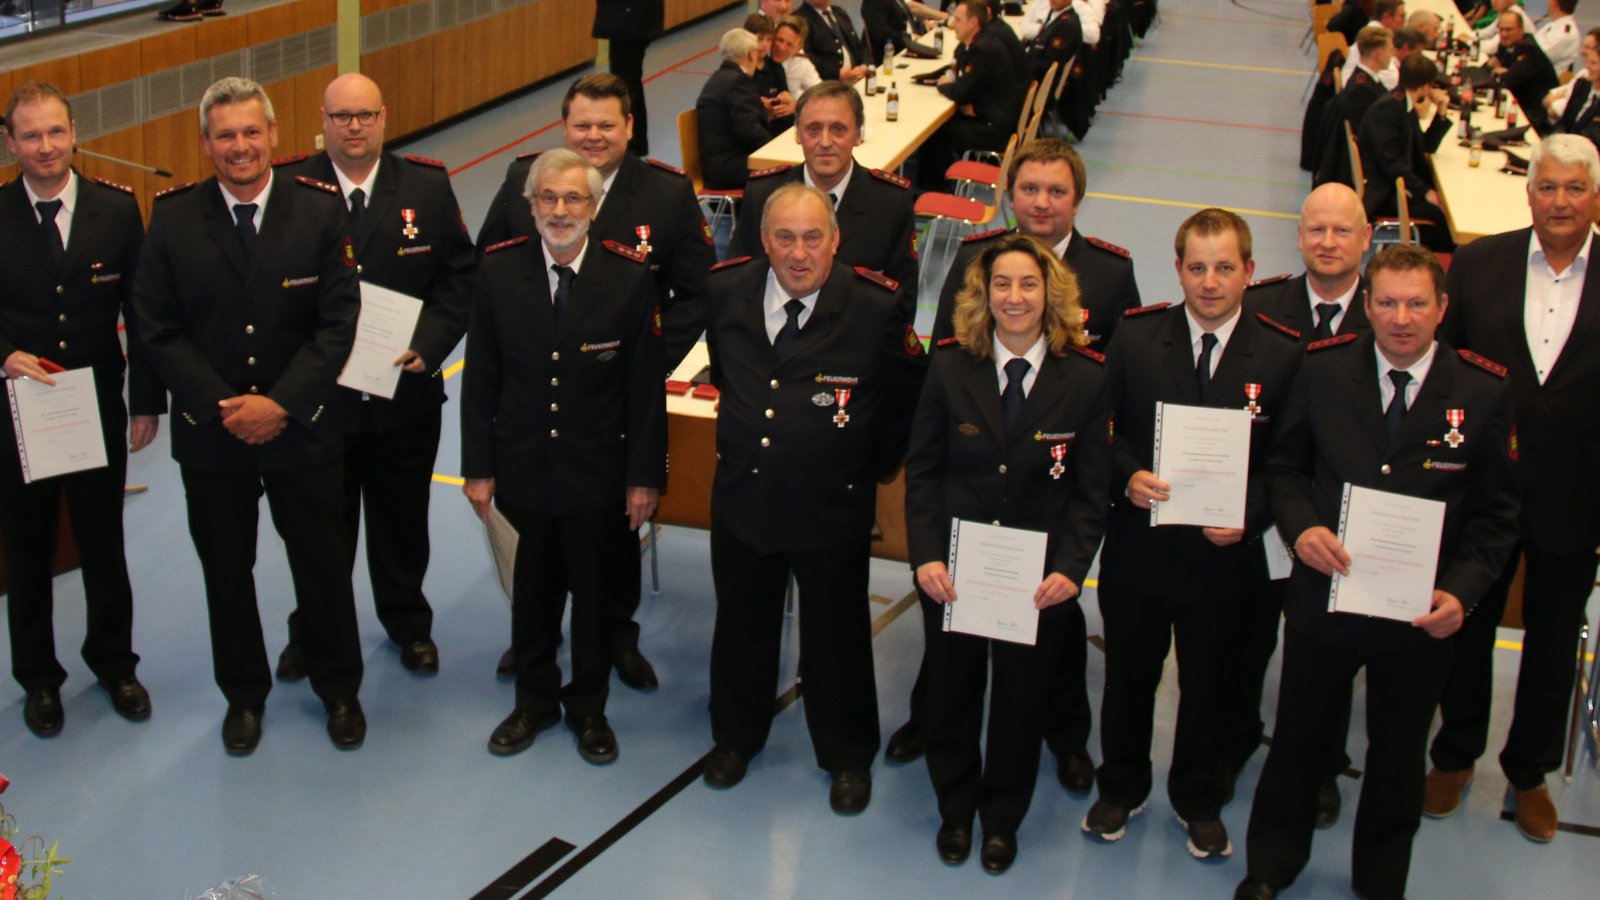 Ehrungen bei der Hauptversammlung der Eberdinger Feuerwehr in Hochdorf; links Kommandant Frank Sattler, rechts Bürgermeister Peter Schäfer. Foto: Bögel